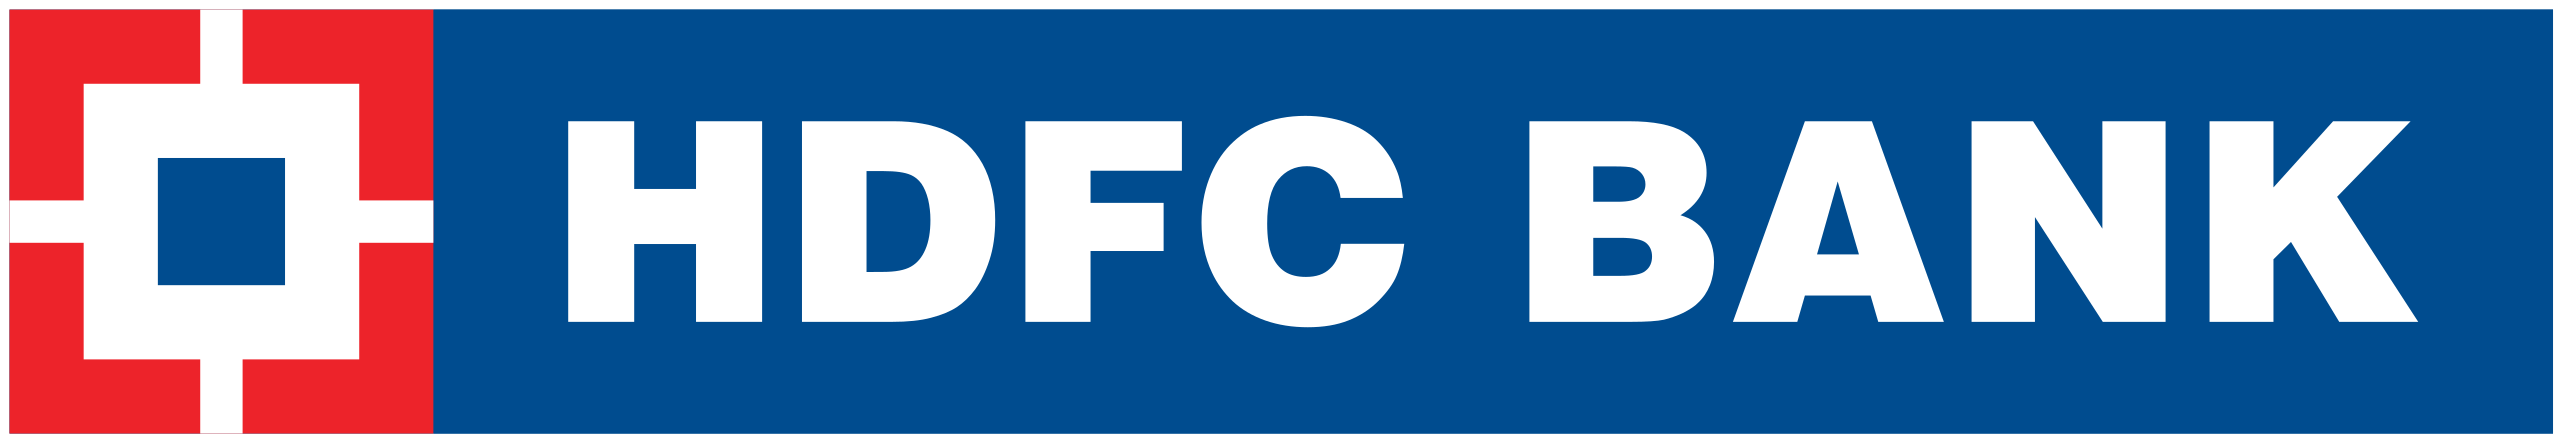 ACOL Logo